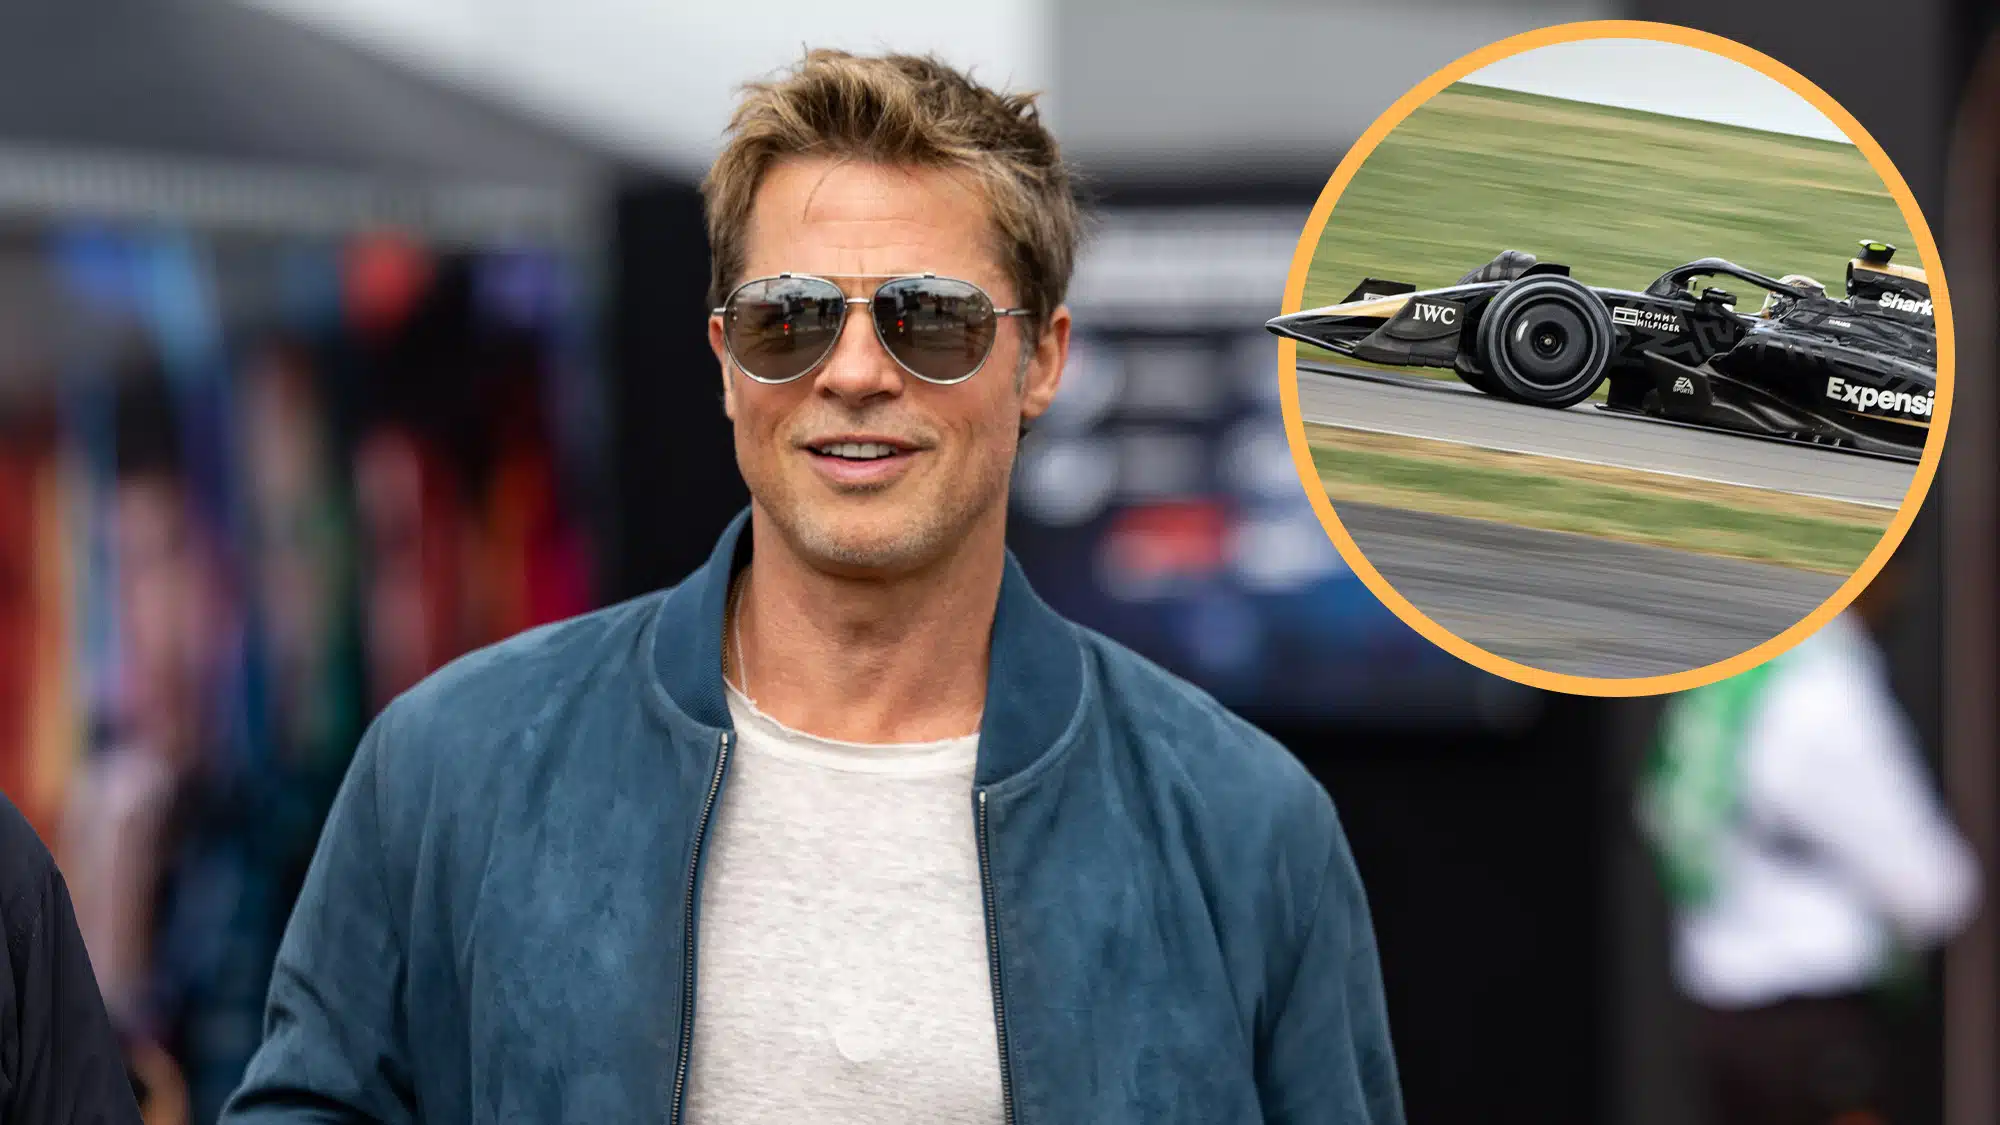 Brad Pitt filming F1 movie at the British GP latest on Silverstone shoot